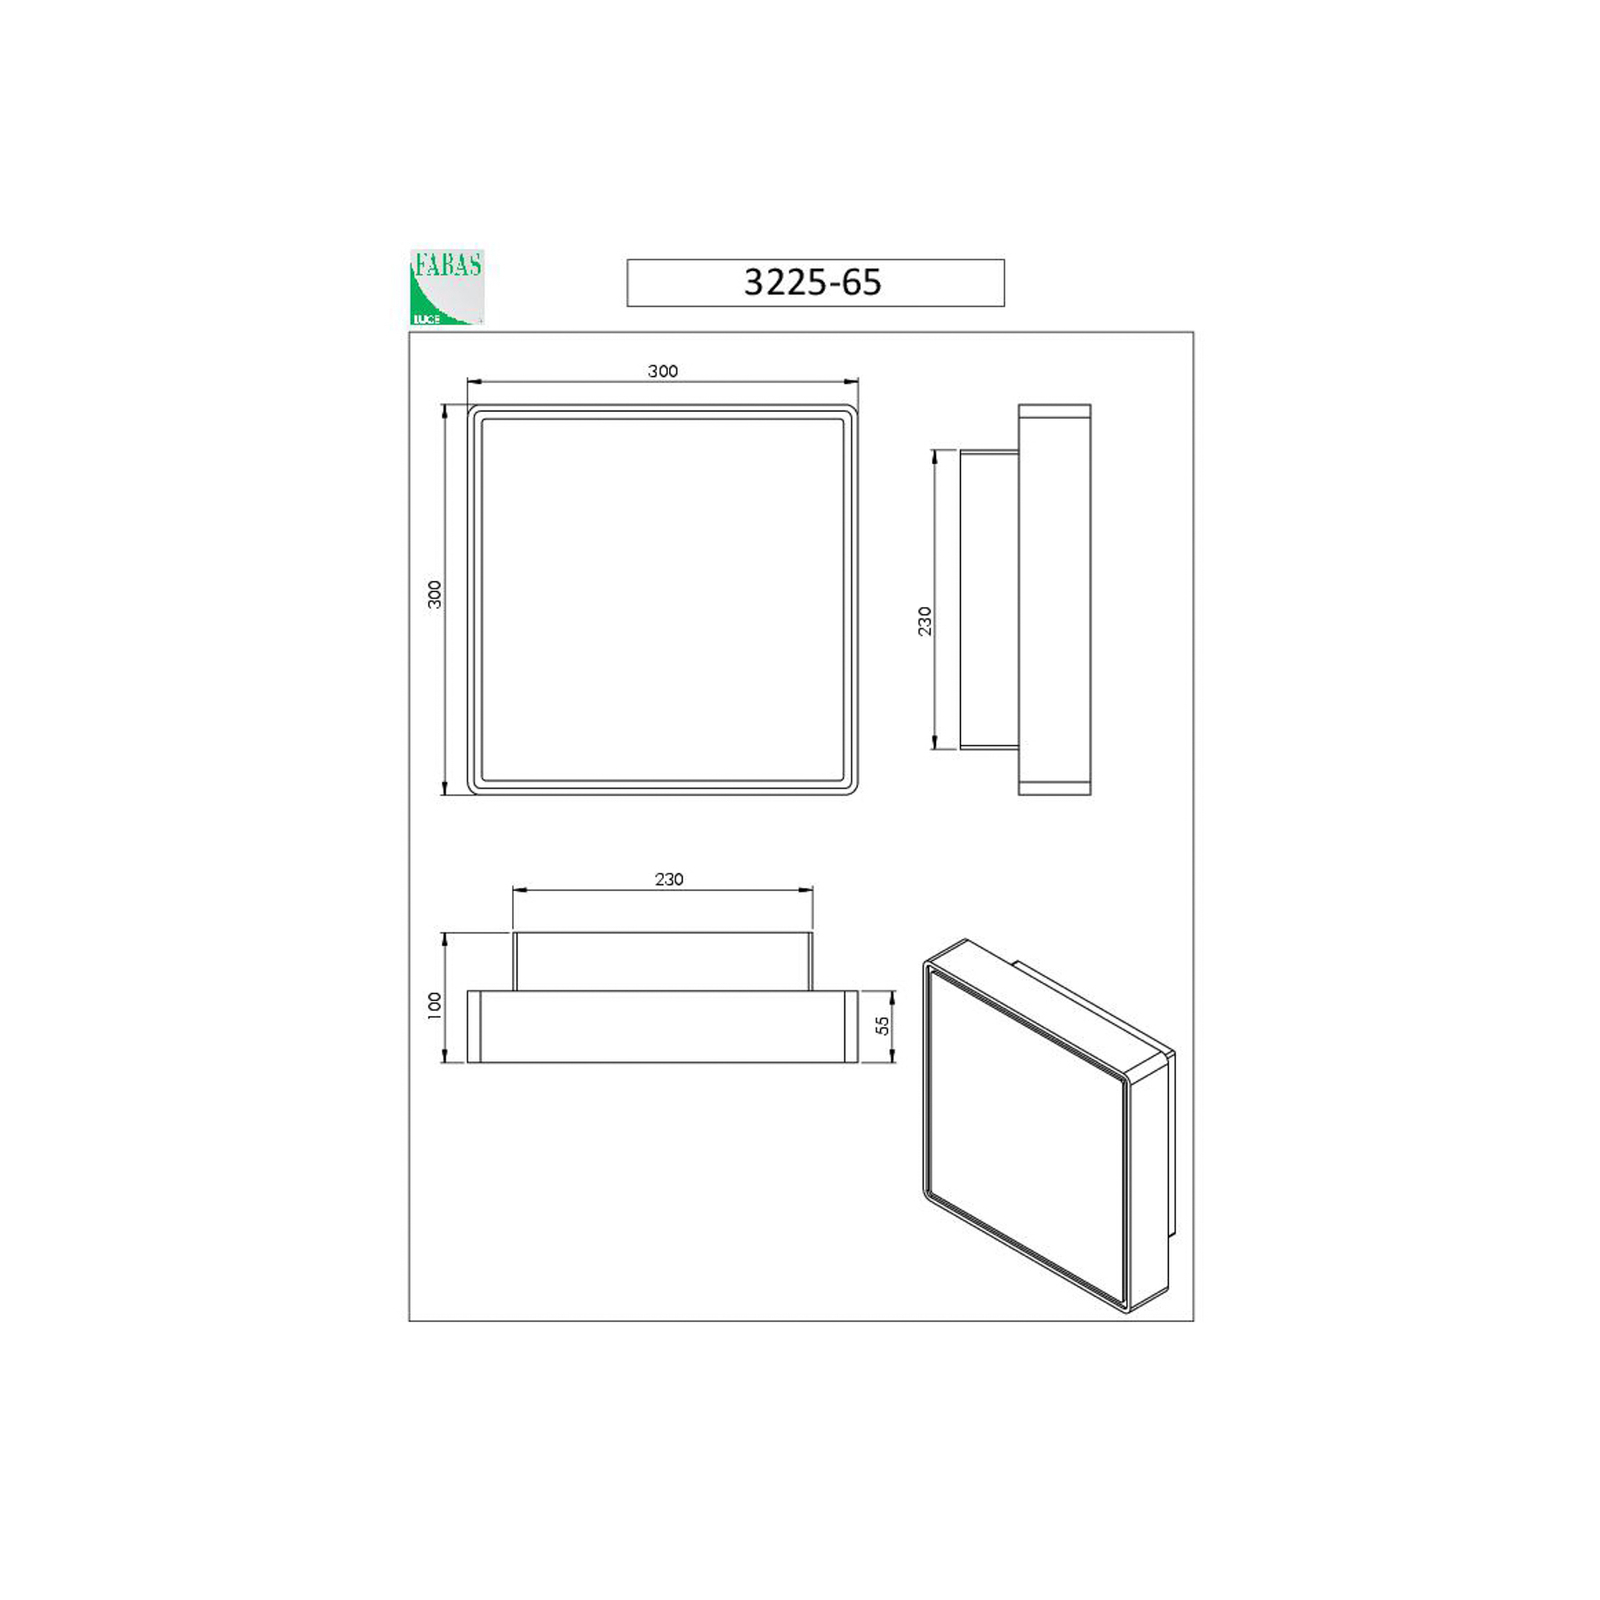 Oban wall light, 30 cm x 30 cm, sensor, 2 x E27, white, IP65